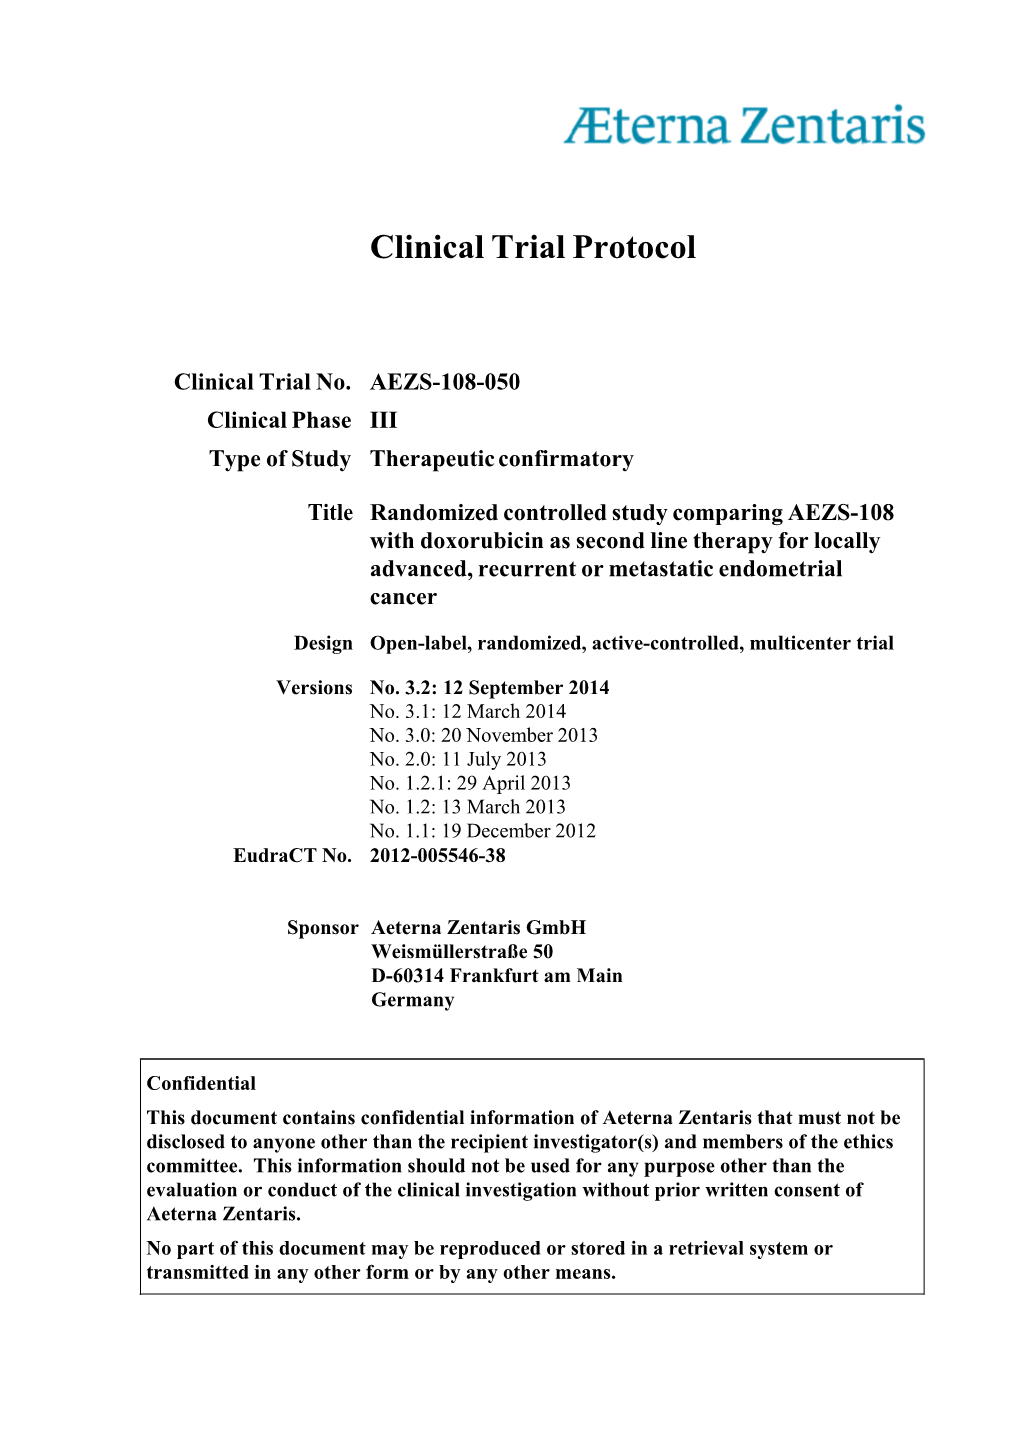 Study Protocol AEZS-108-050 Confidential Version 3.2 / 12 Sep 2014